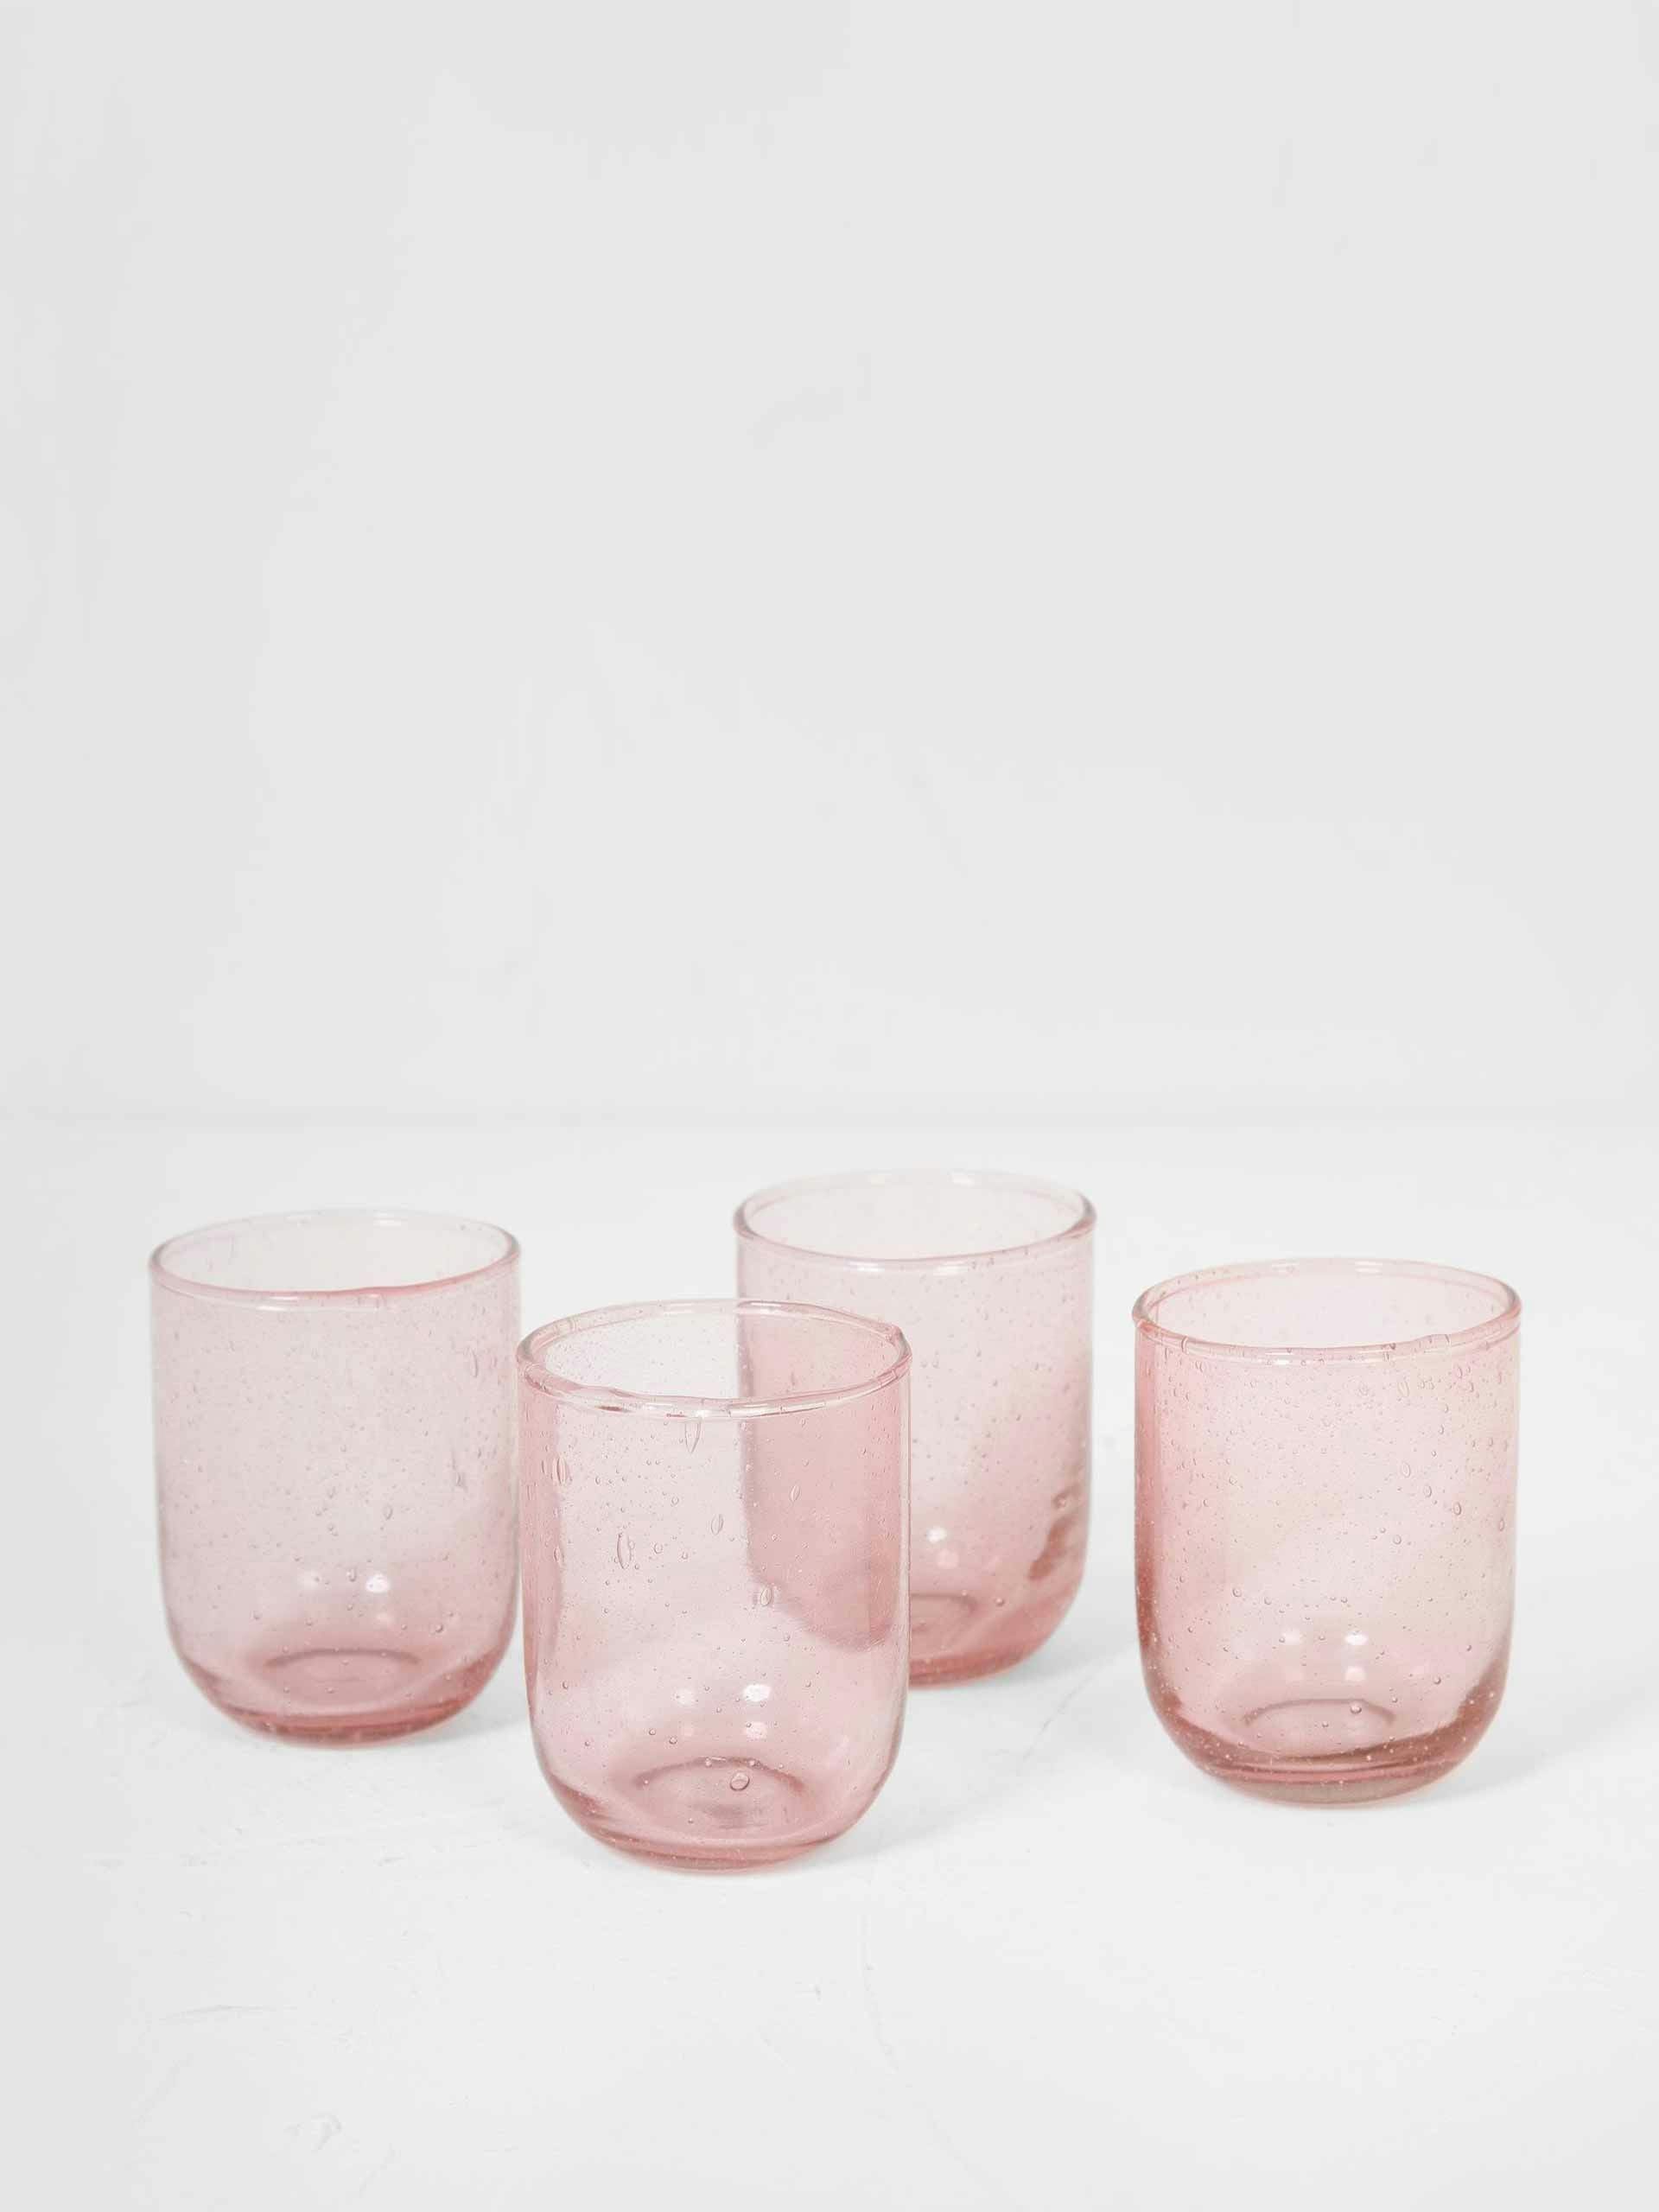 Pale rose glasses set